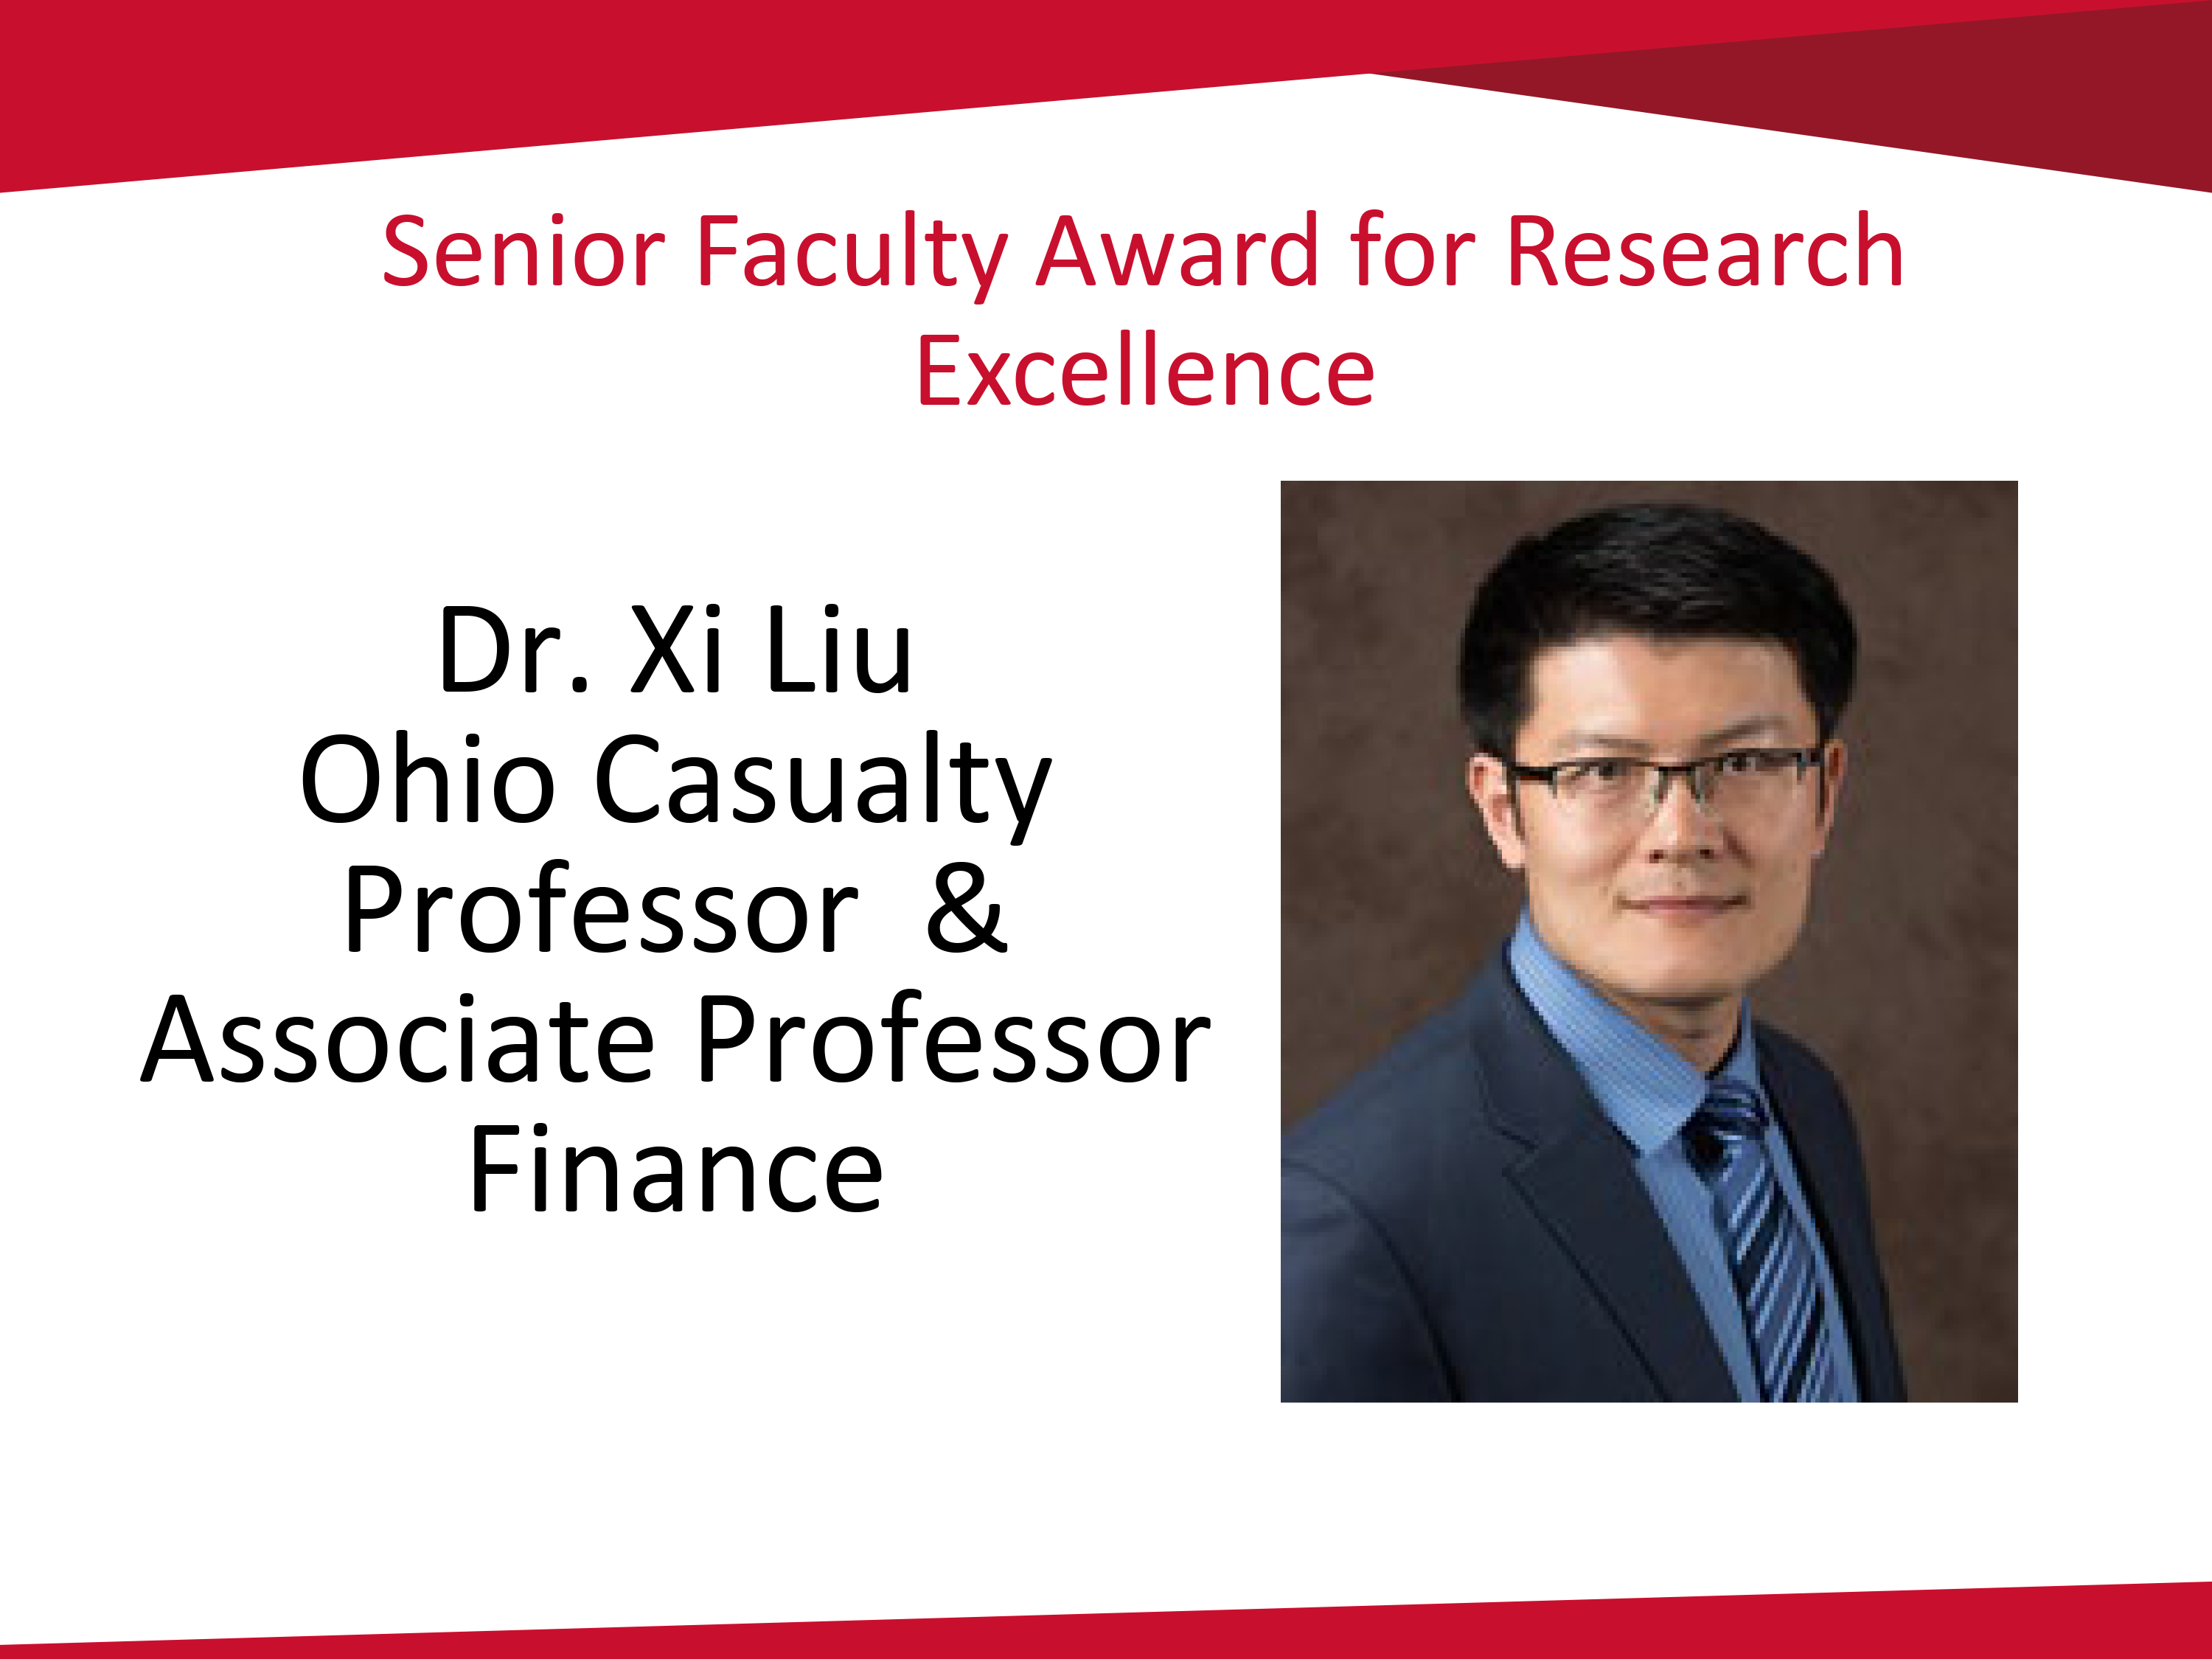 Xi Liu, senior faculty research award